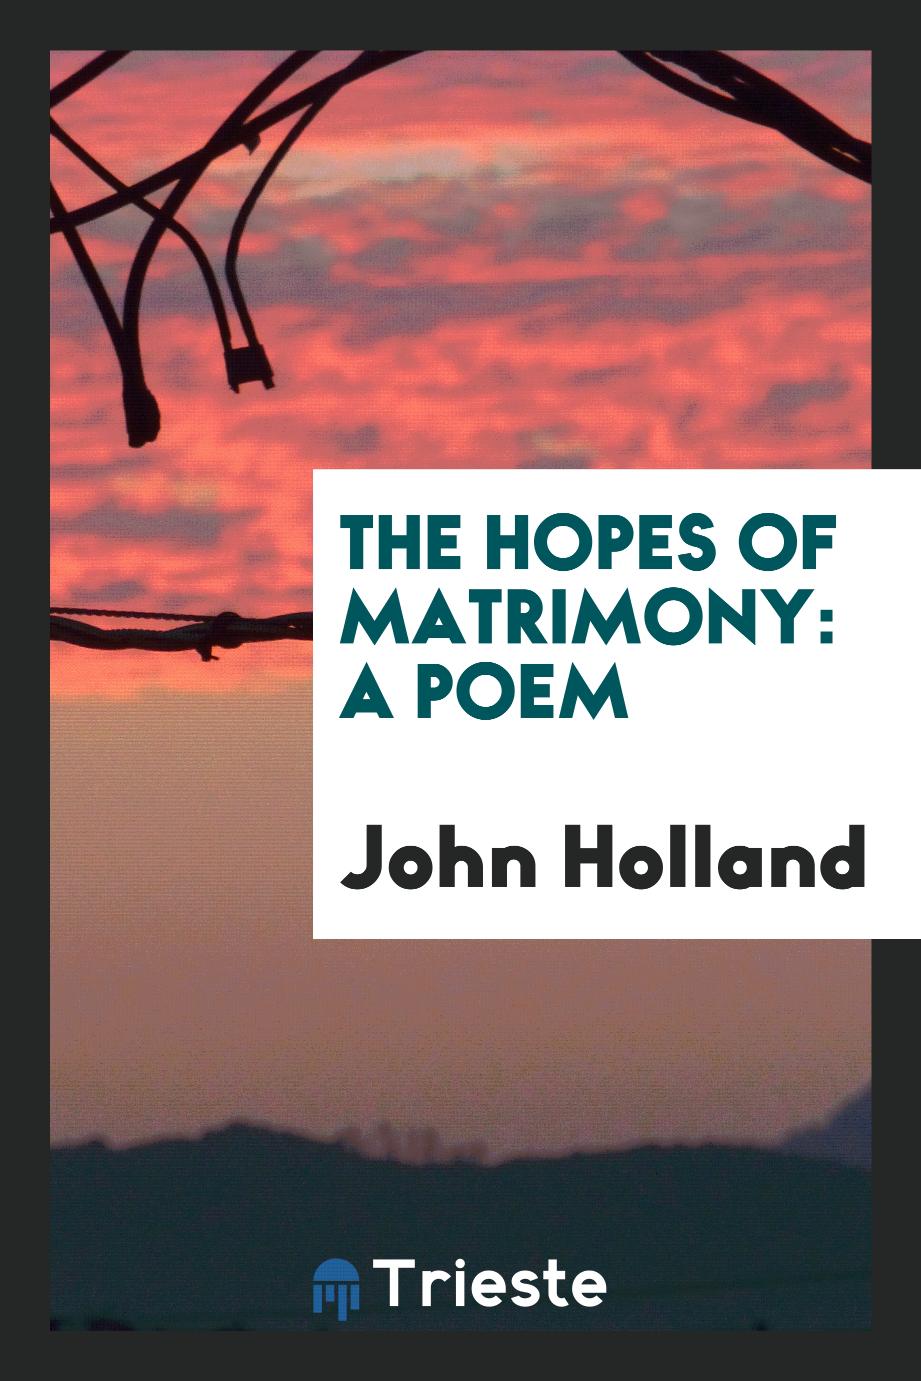 The hopes of matrimony: a poem